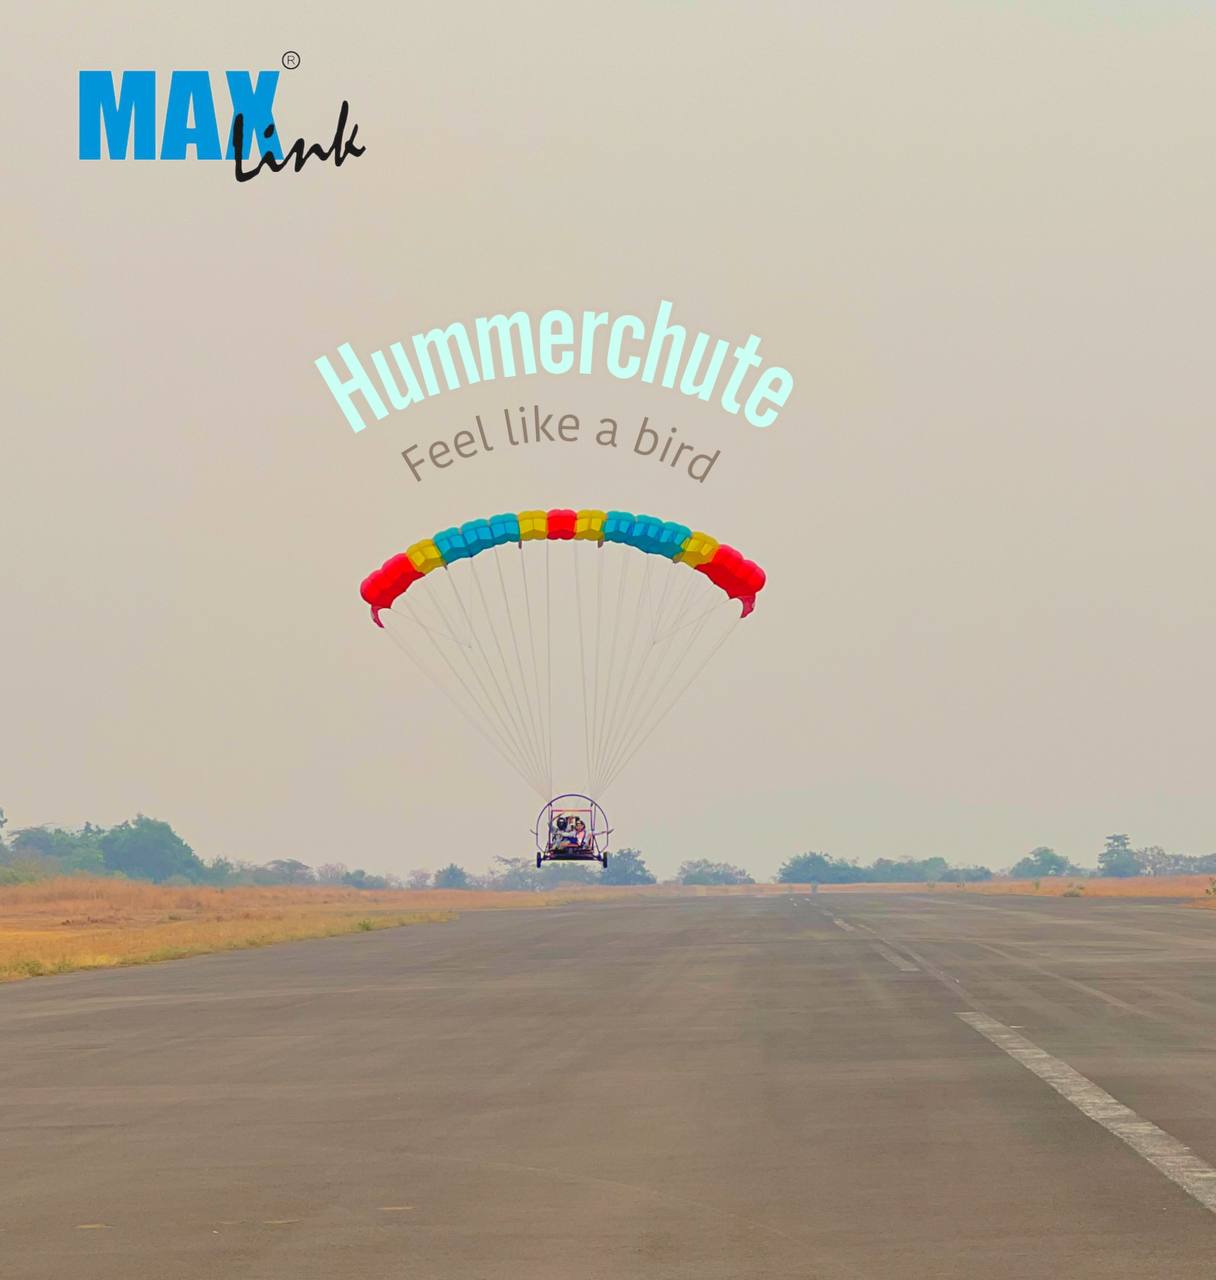 Hummerchute Ride in Aamby Valley Lonavala